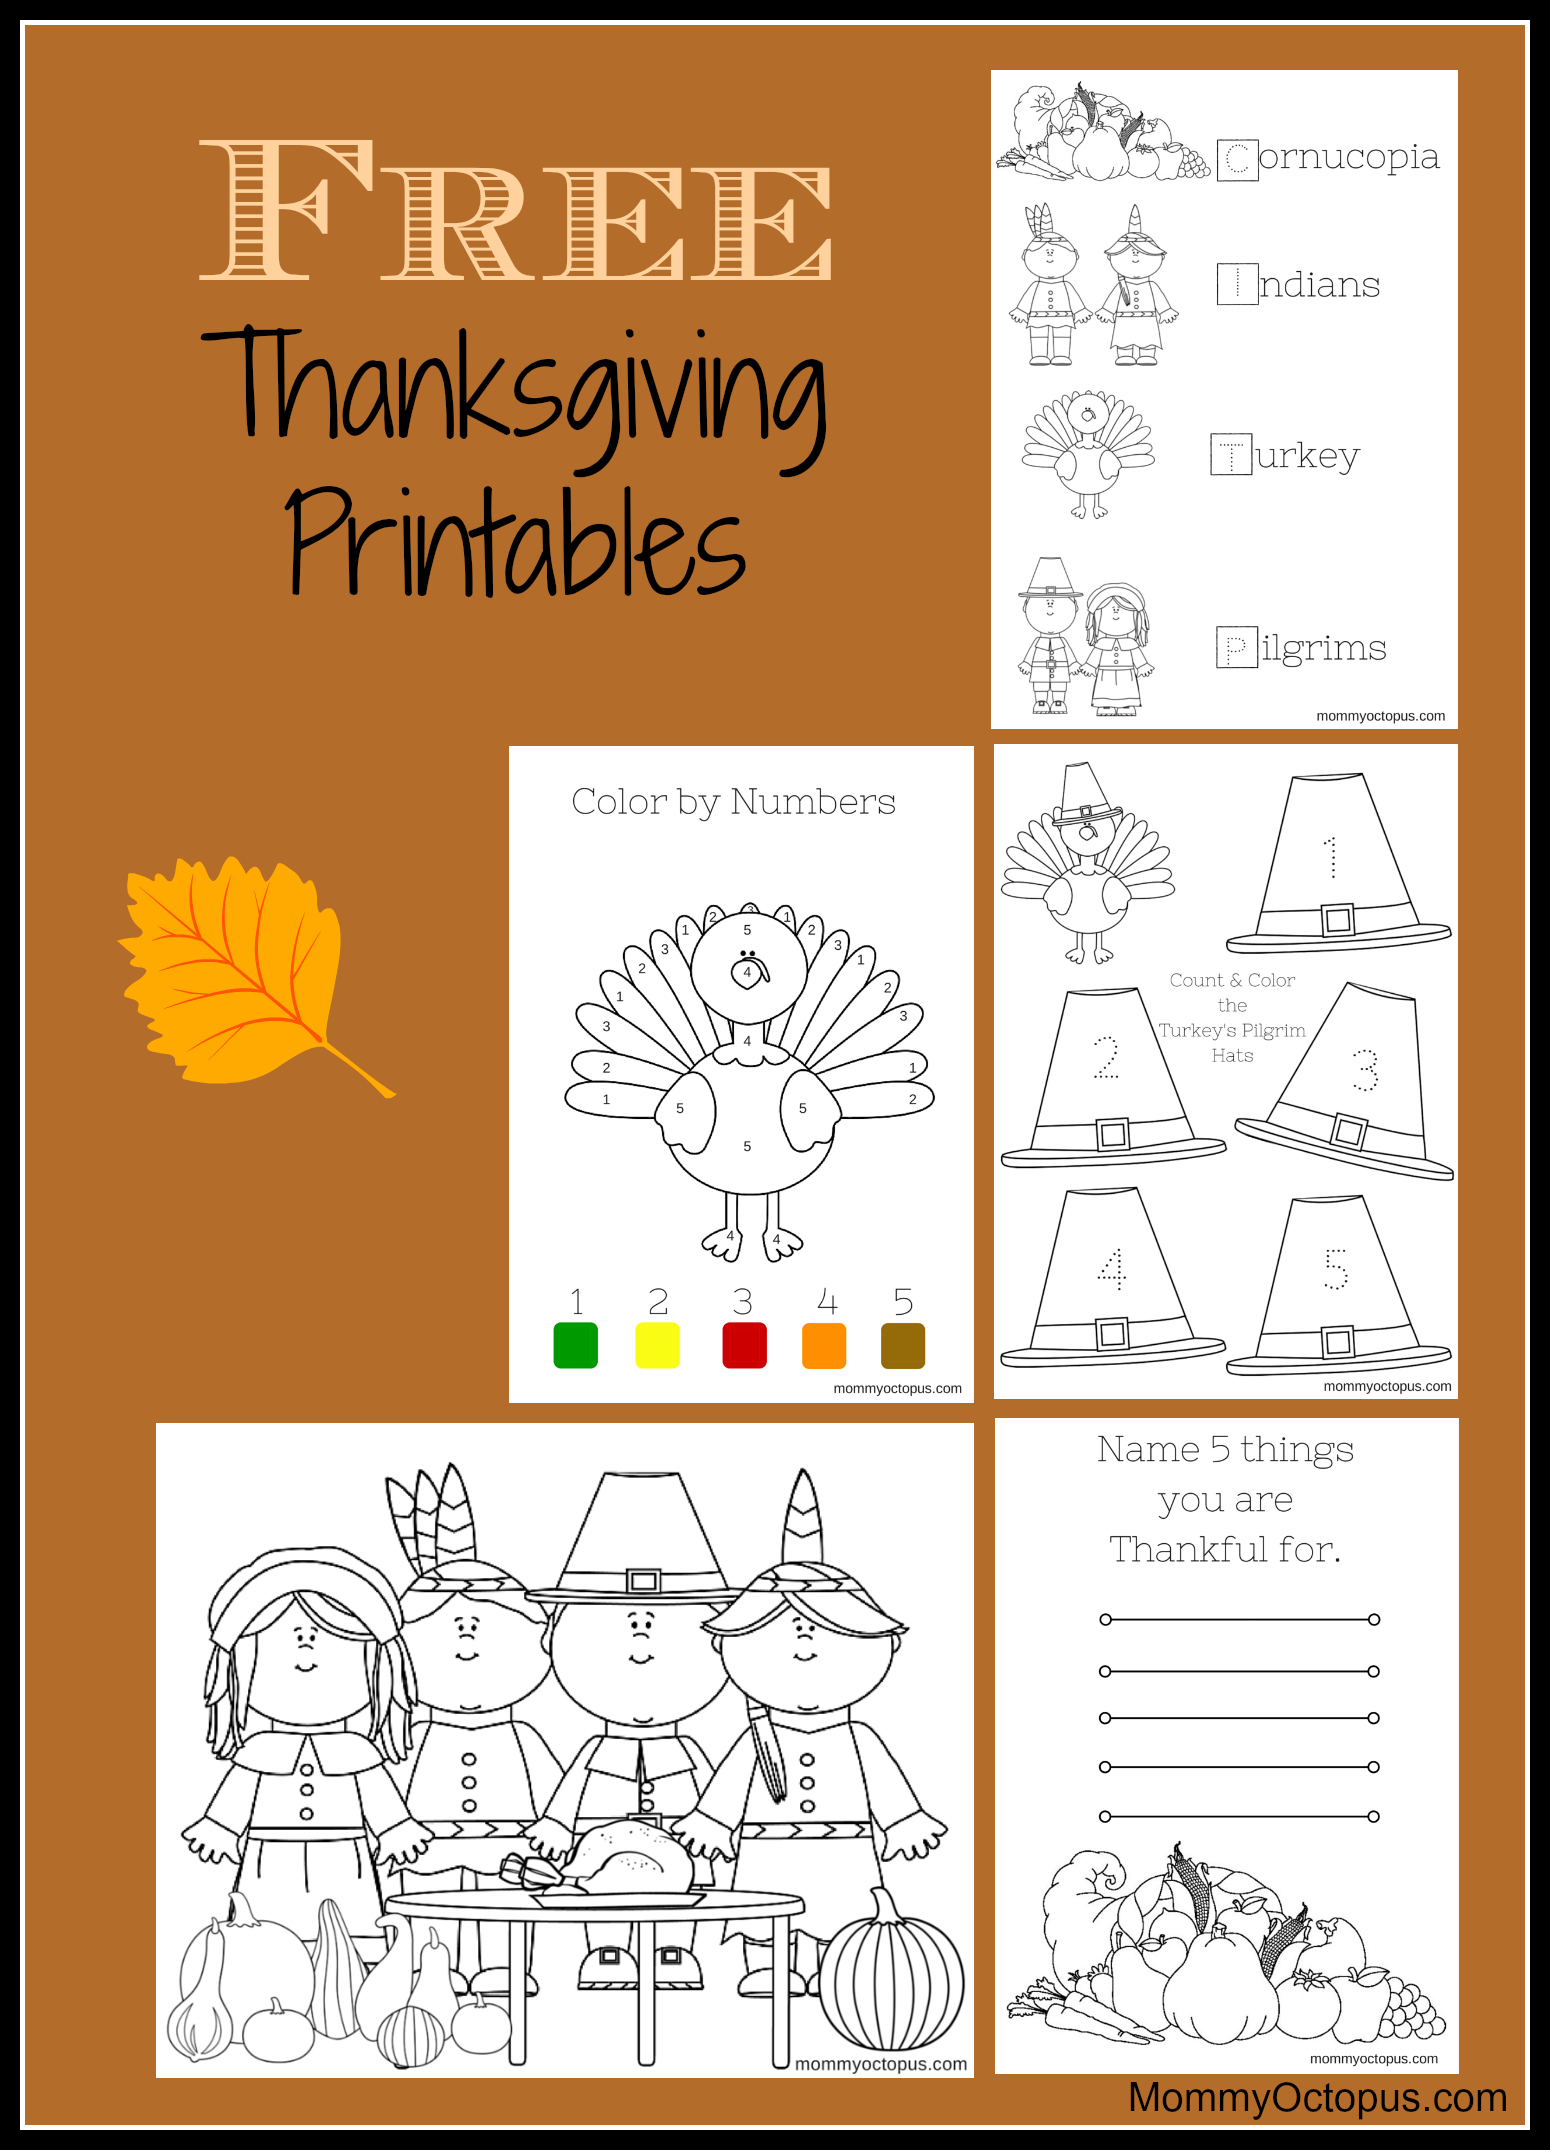 free-thanksgiving-printables-for-kids